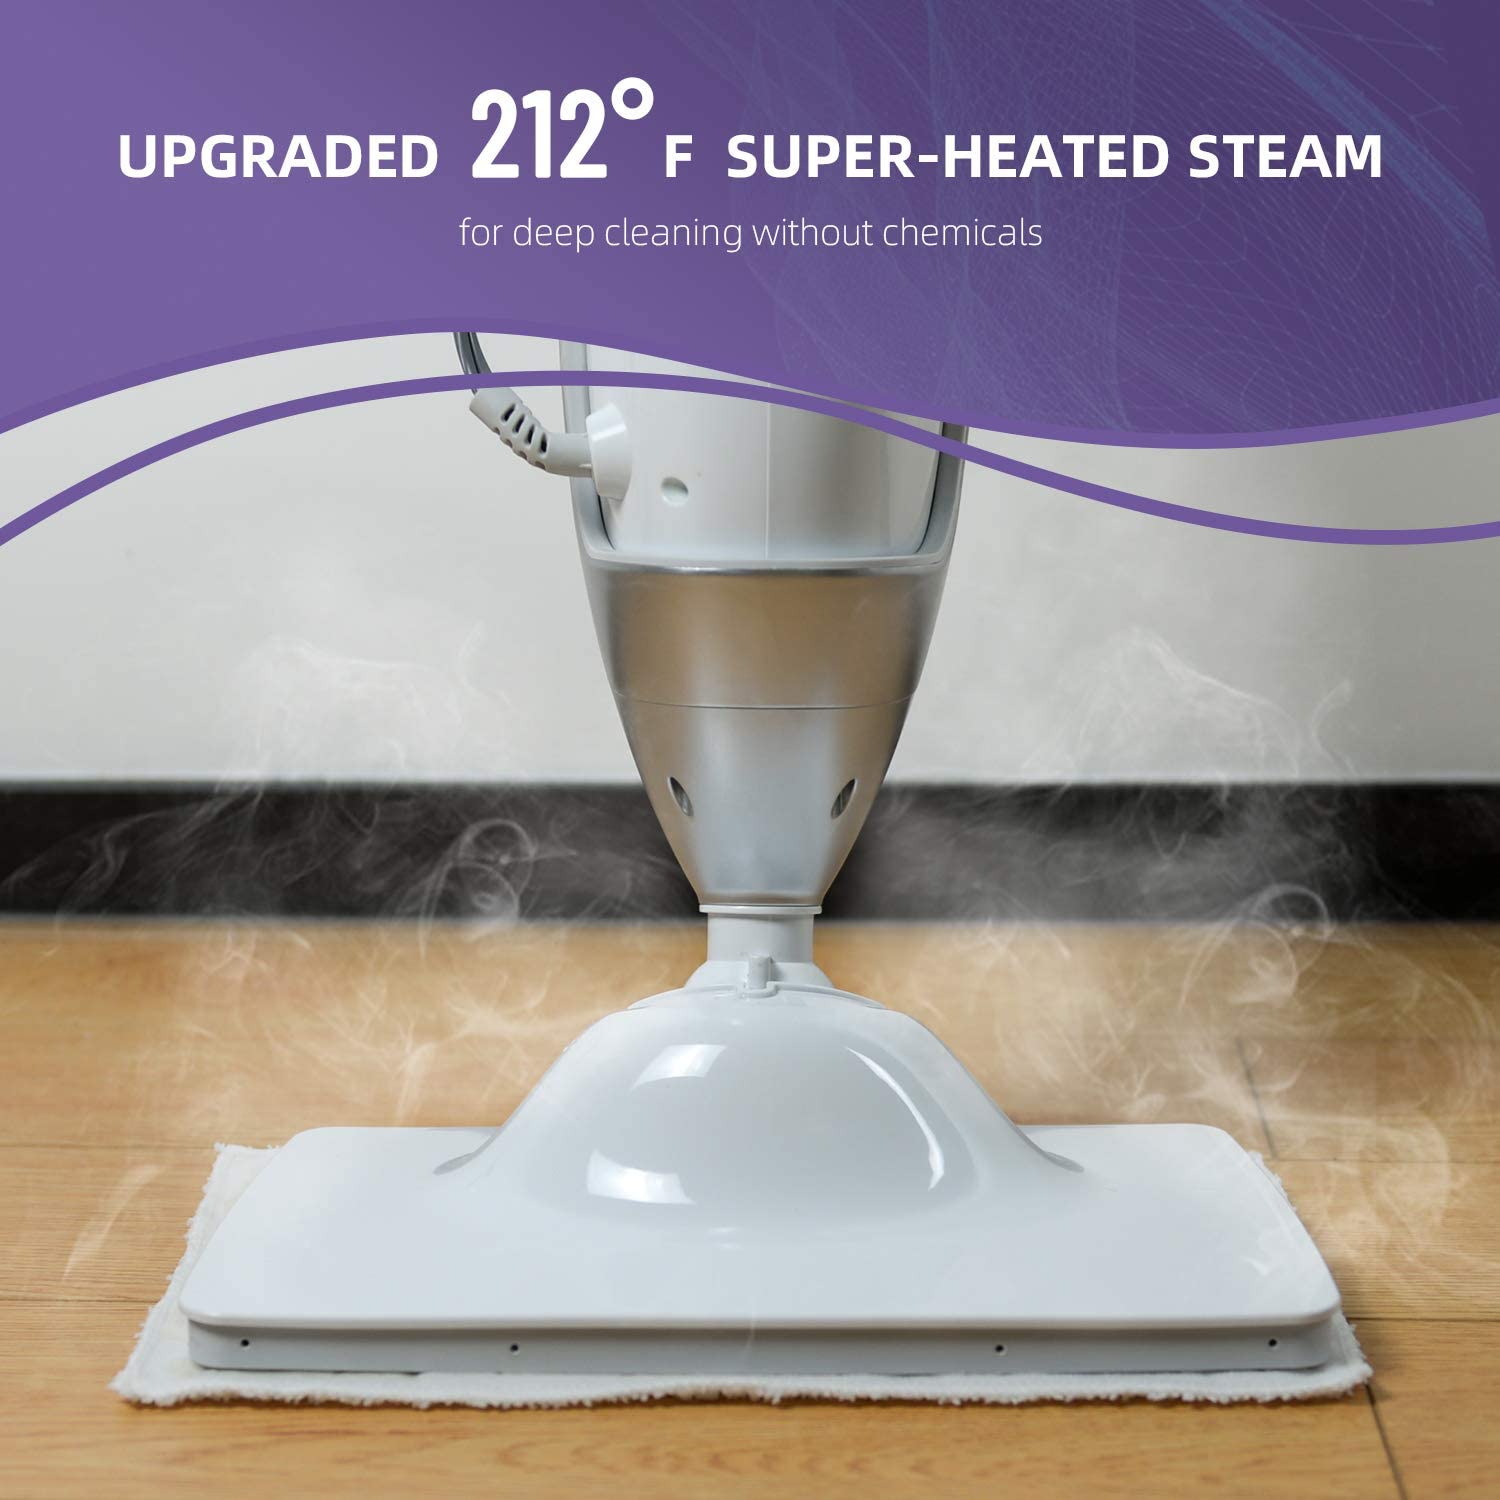 LIGHT 'N' EASY Multi-Functional steam mop Steamer for Cleaning Hardwood Floor Cleaner for Tile Grout Laminate Ceramic, 7688ANW, White - image 2 of 8